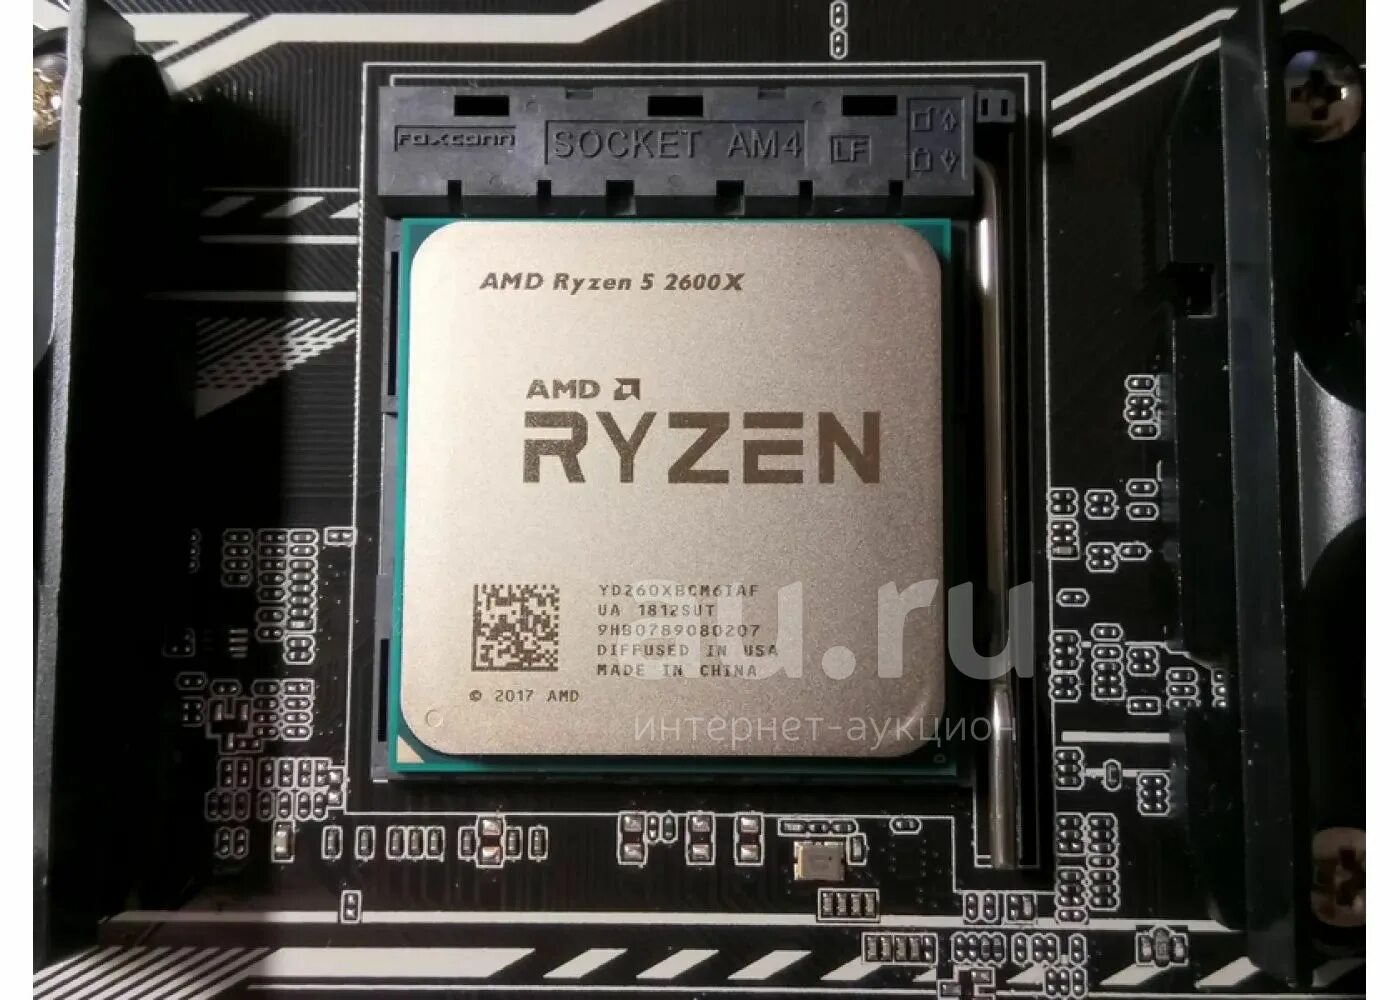 Amd ryzen 5 2600 цена. AMD Ryzen 5 2600x (Box). AMD 5 2600. Процессор AMD Ryzen 5 2600, socketam4, Box. Ryzen 7 2600.